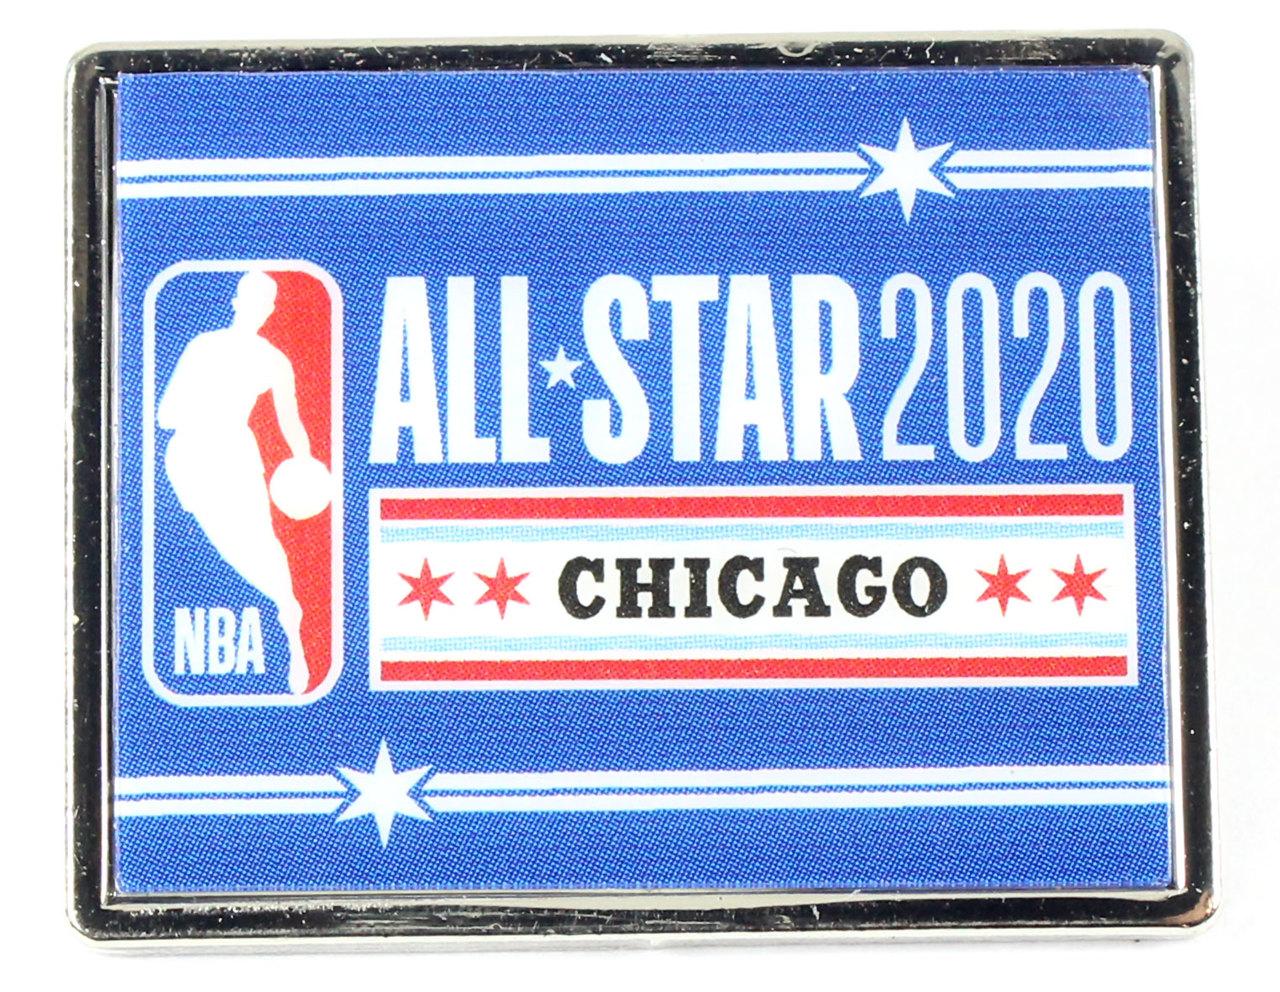 NBA All Star 2020 Wallpaper